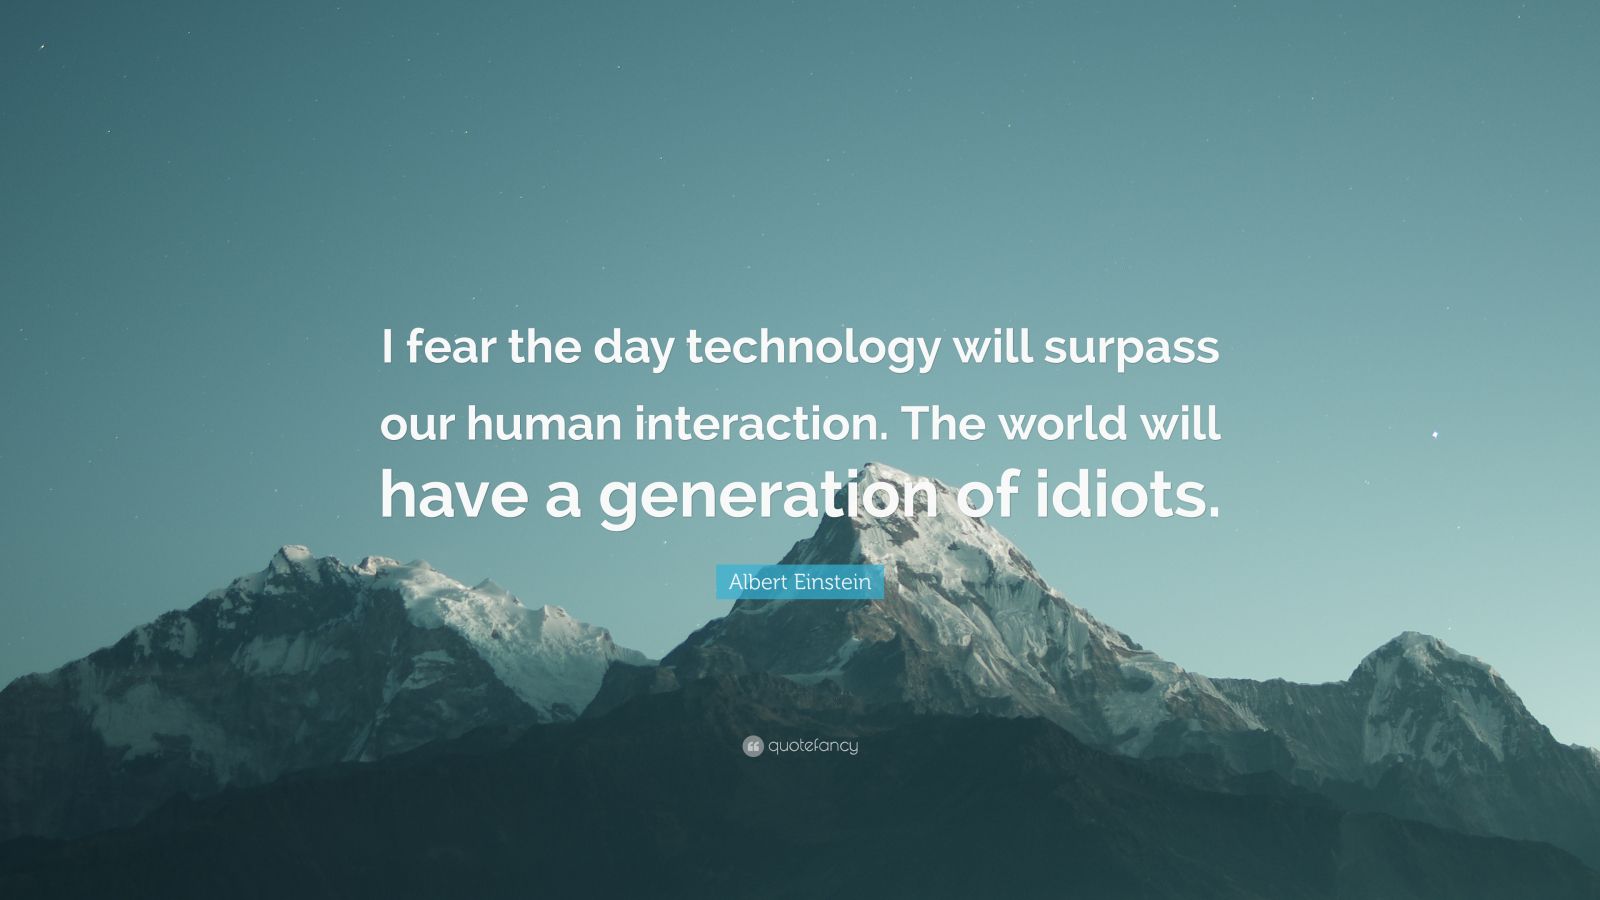 Albert Einstein Quote “I fear the day technology will